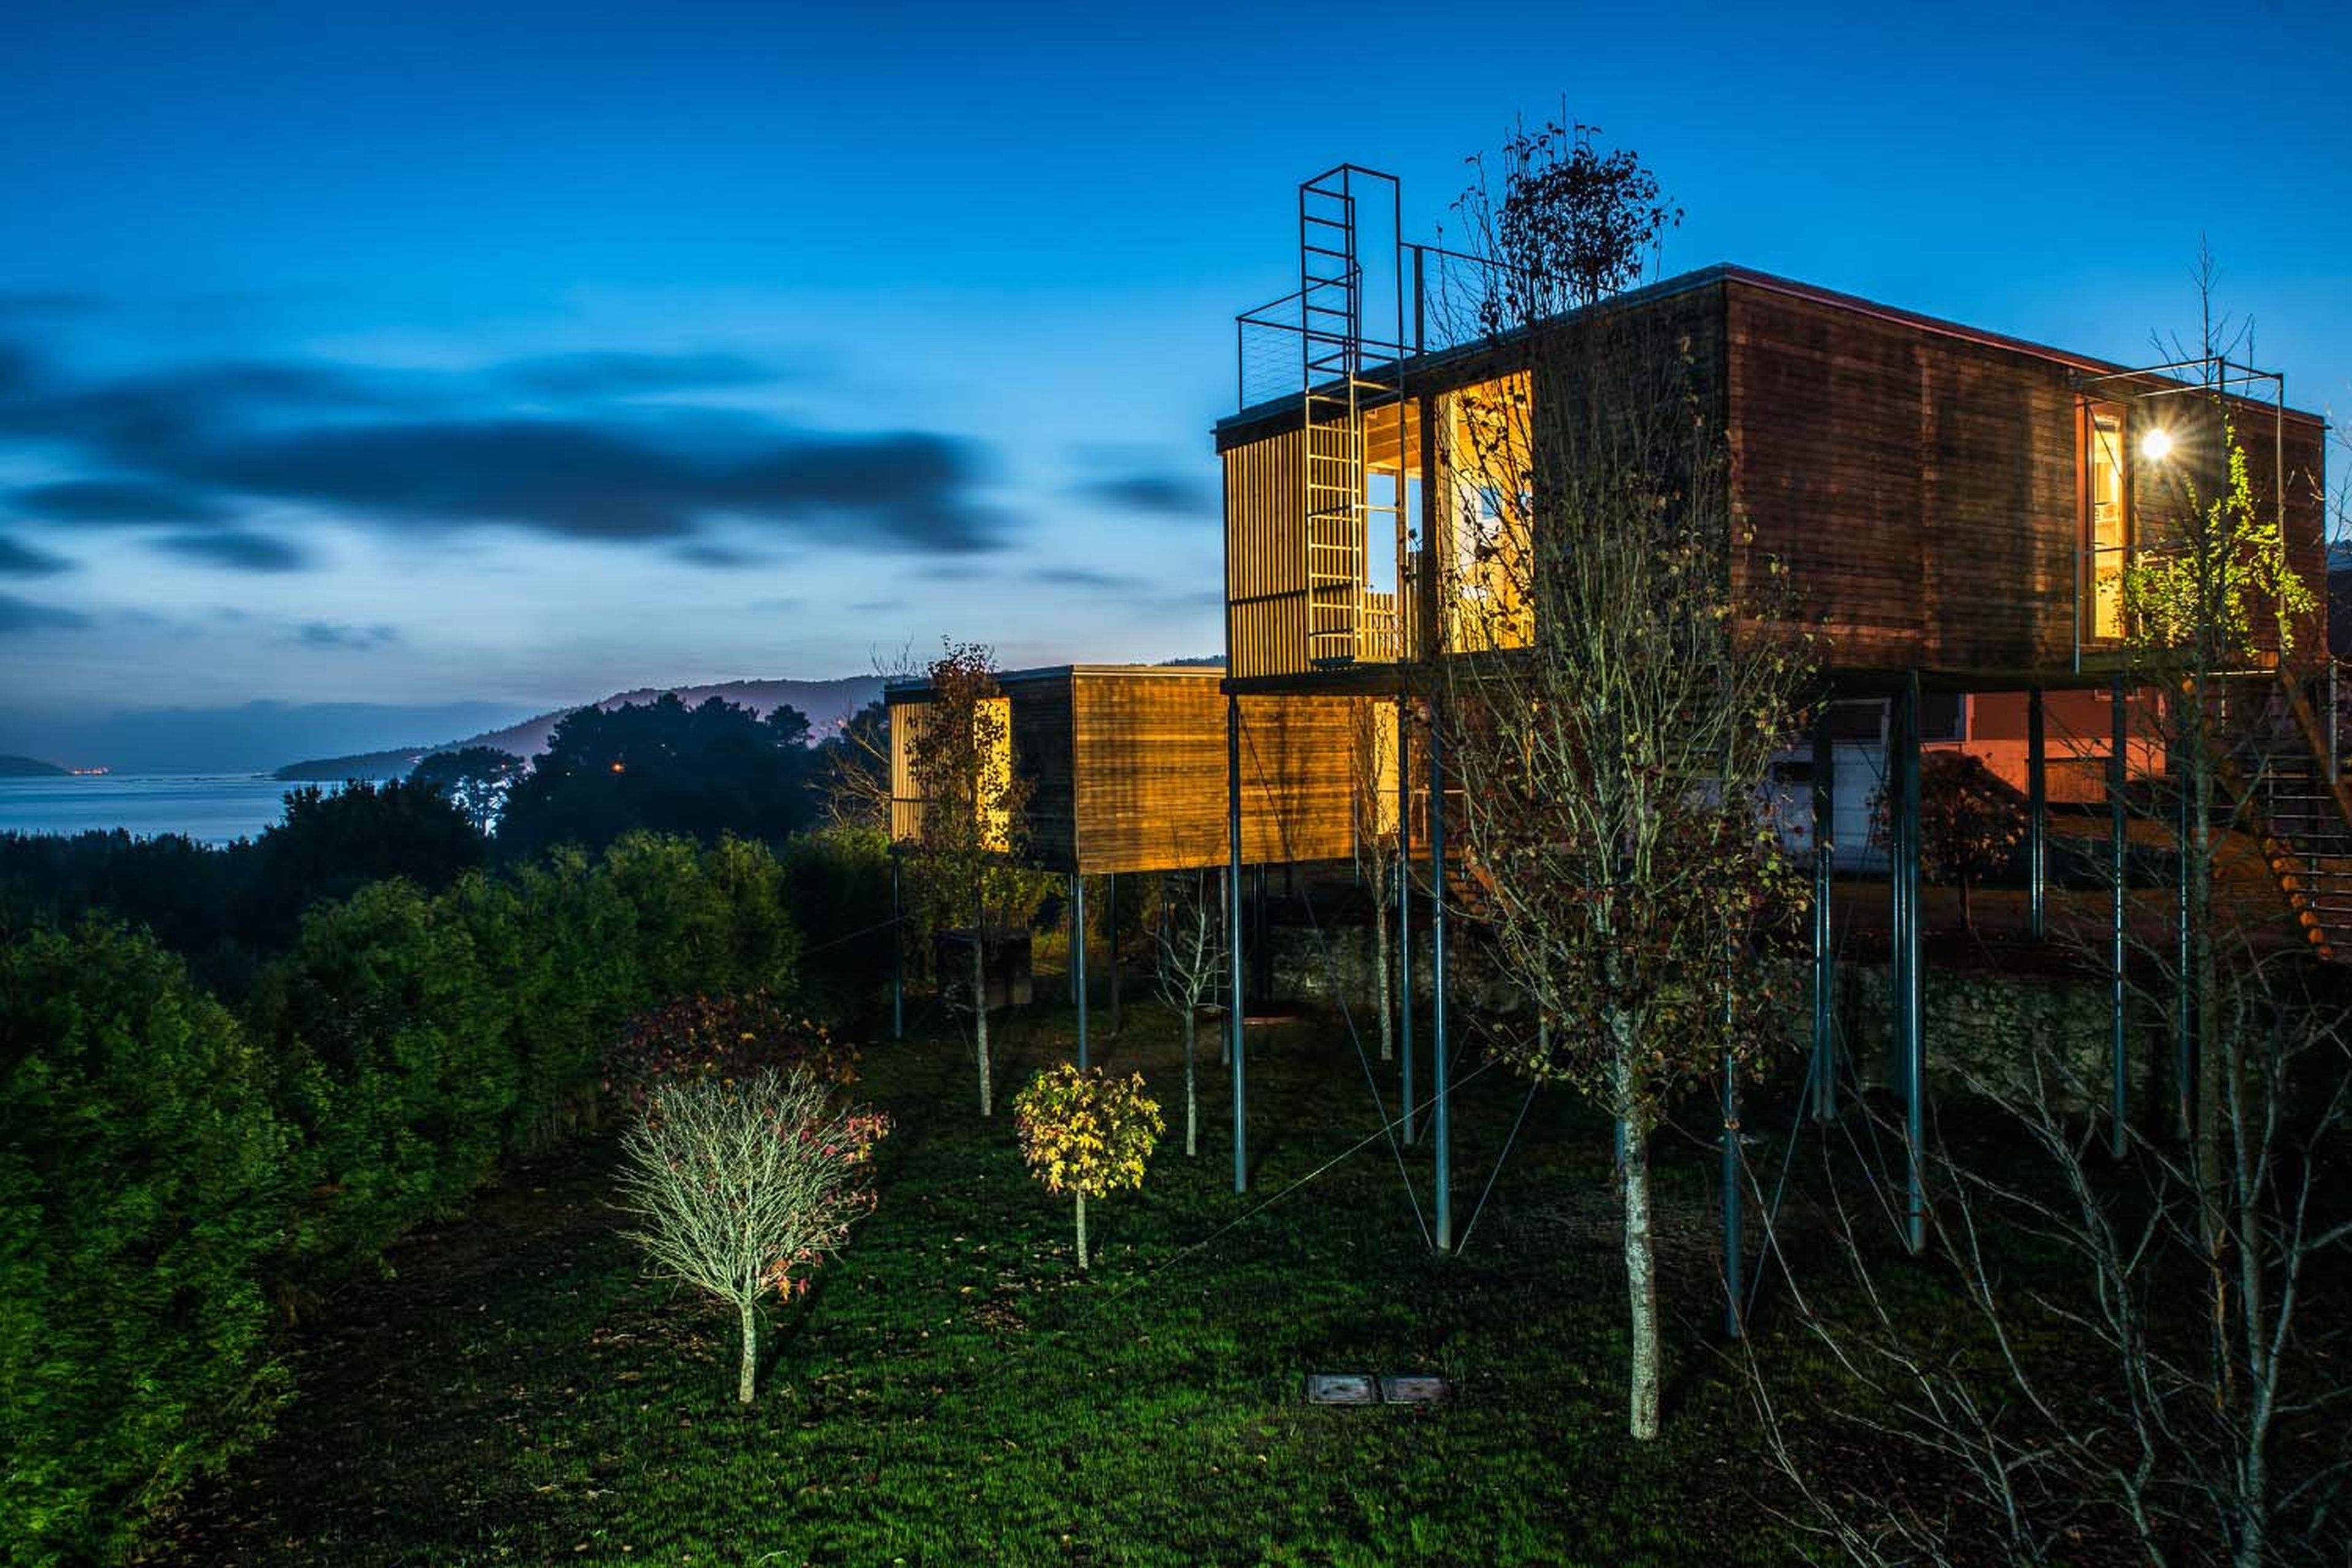 Hoteles para dormir en naturaleza: las mejores cabañas en los árboles de España | Business Insider España